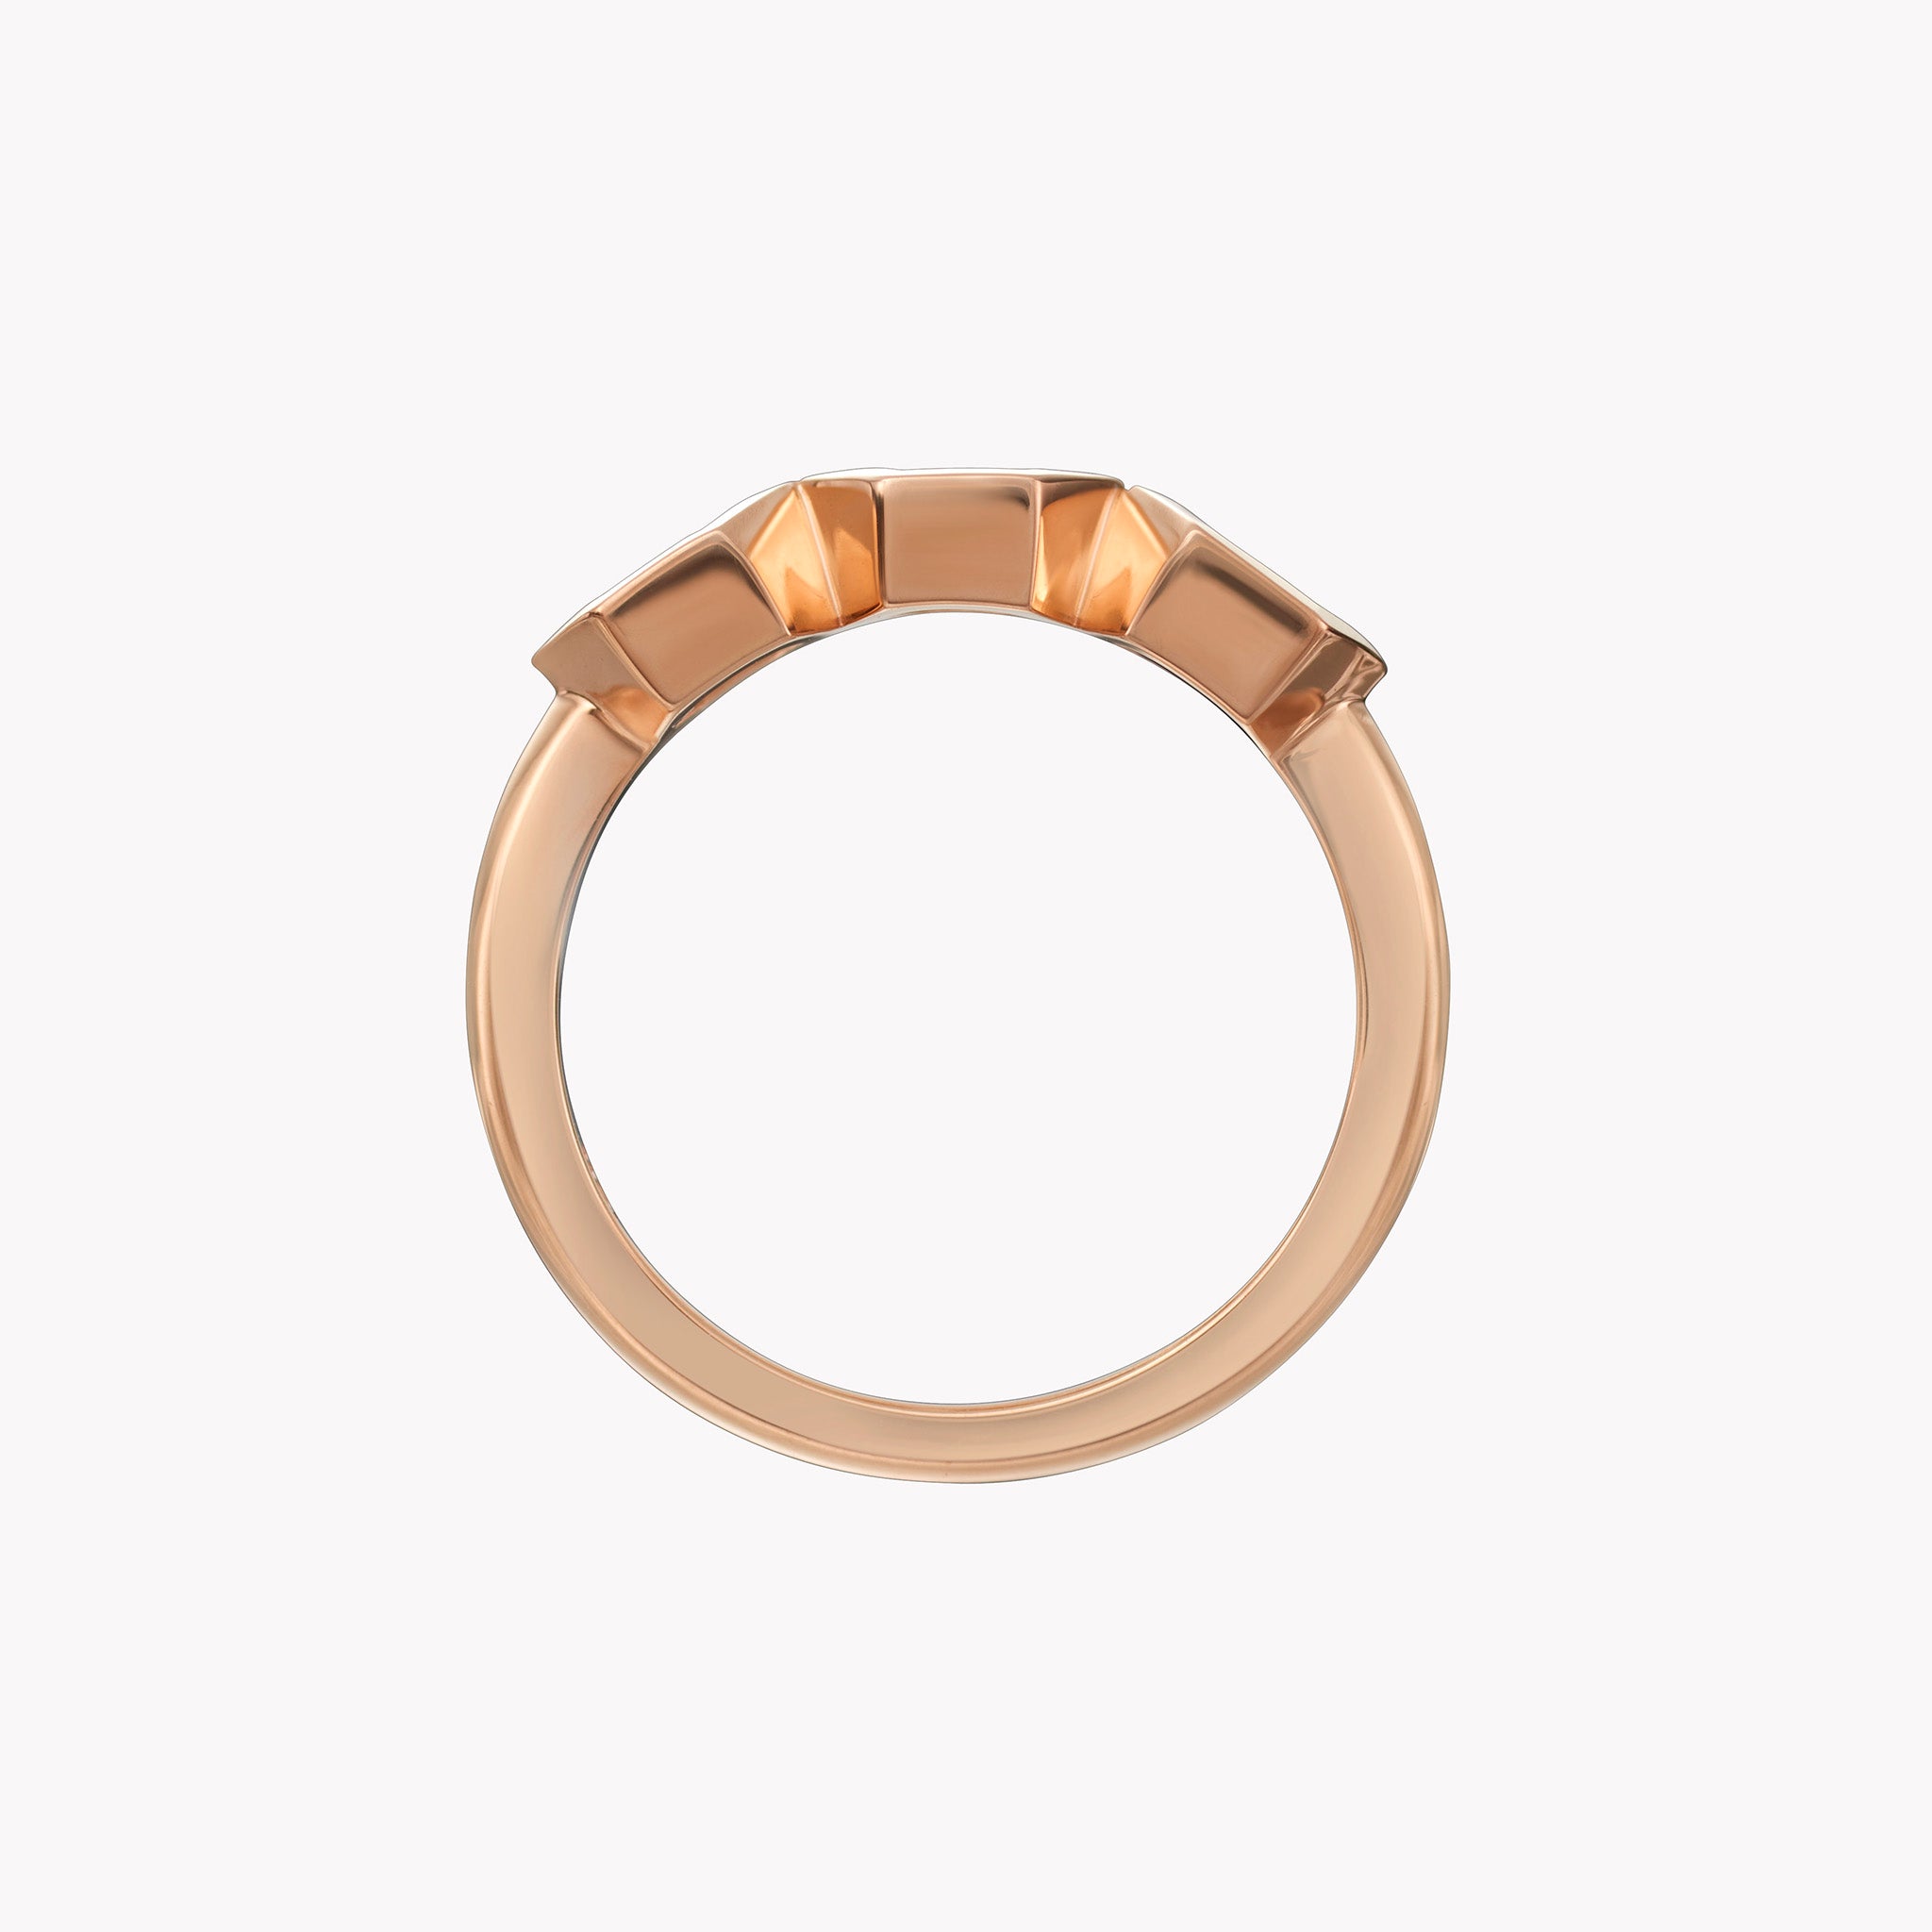 The Nova Pinky Ring